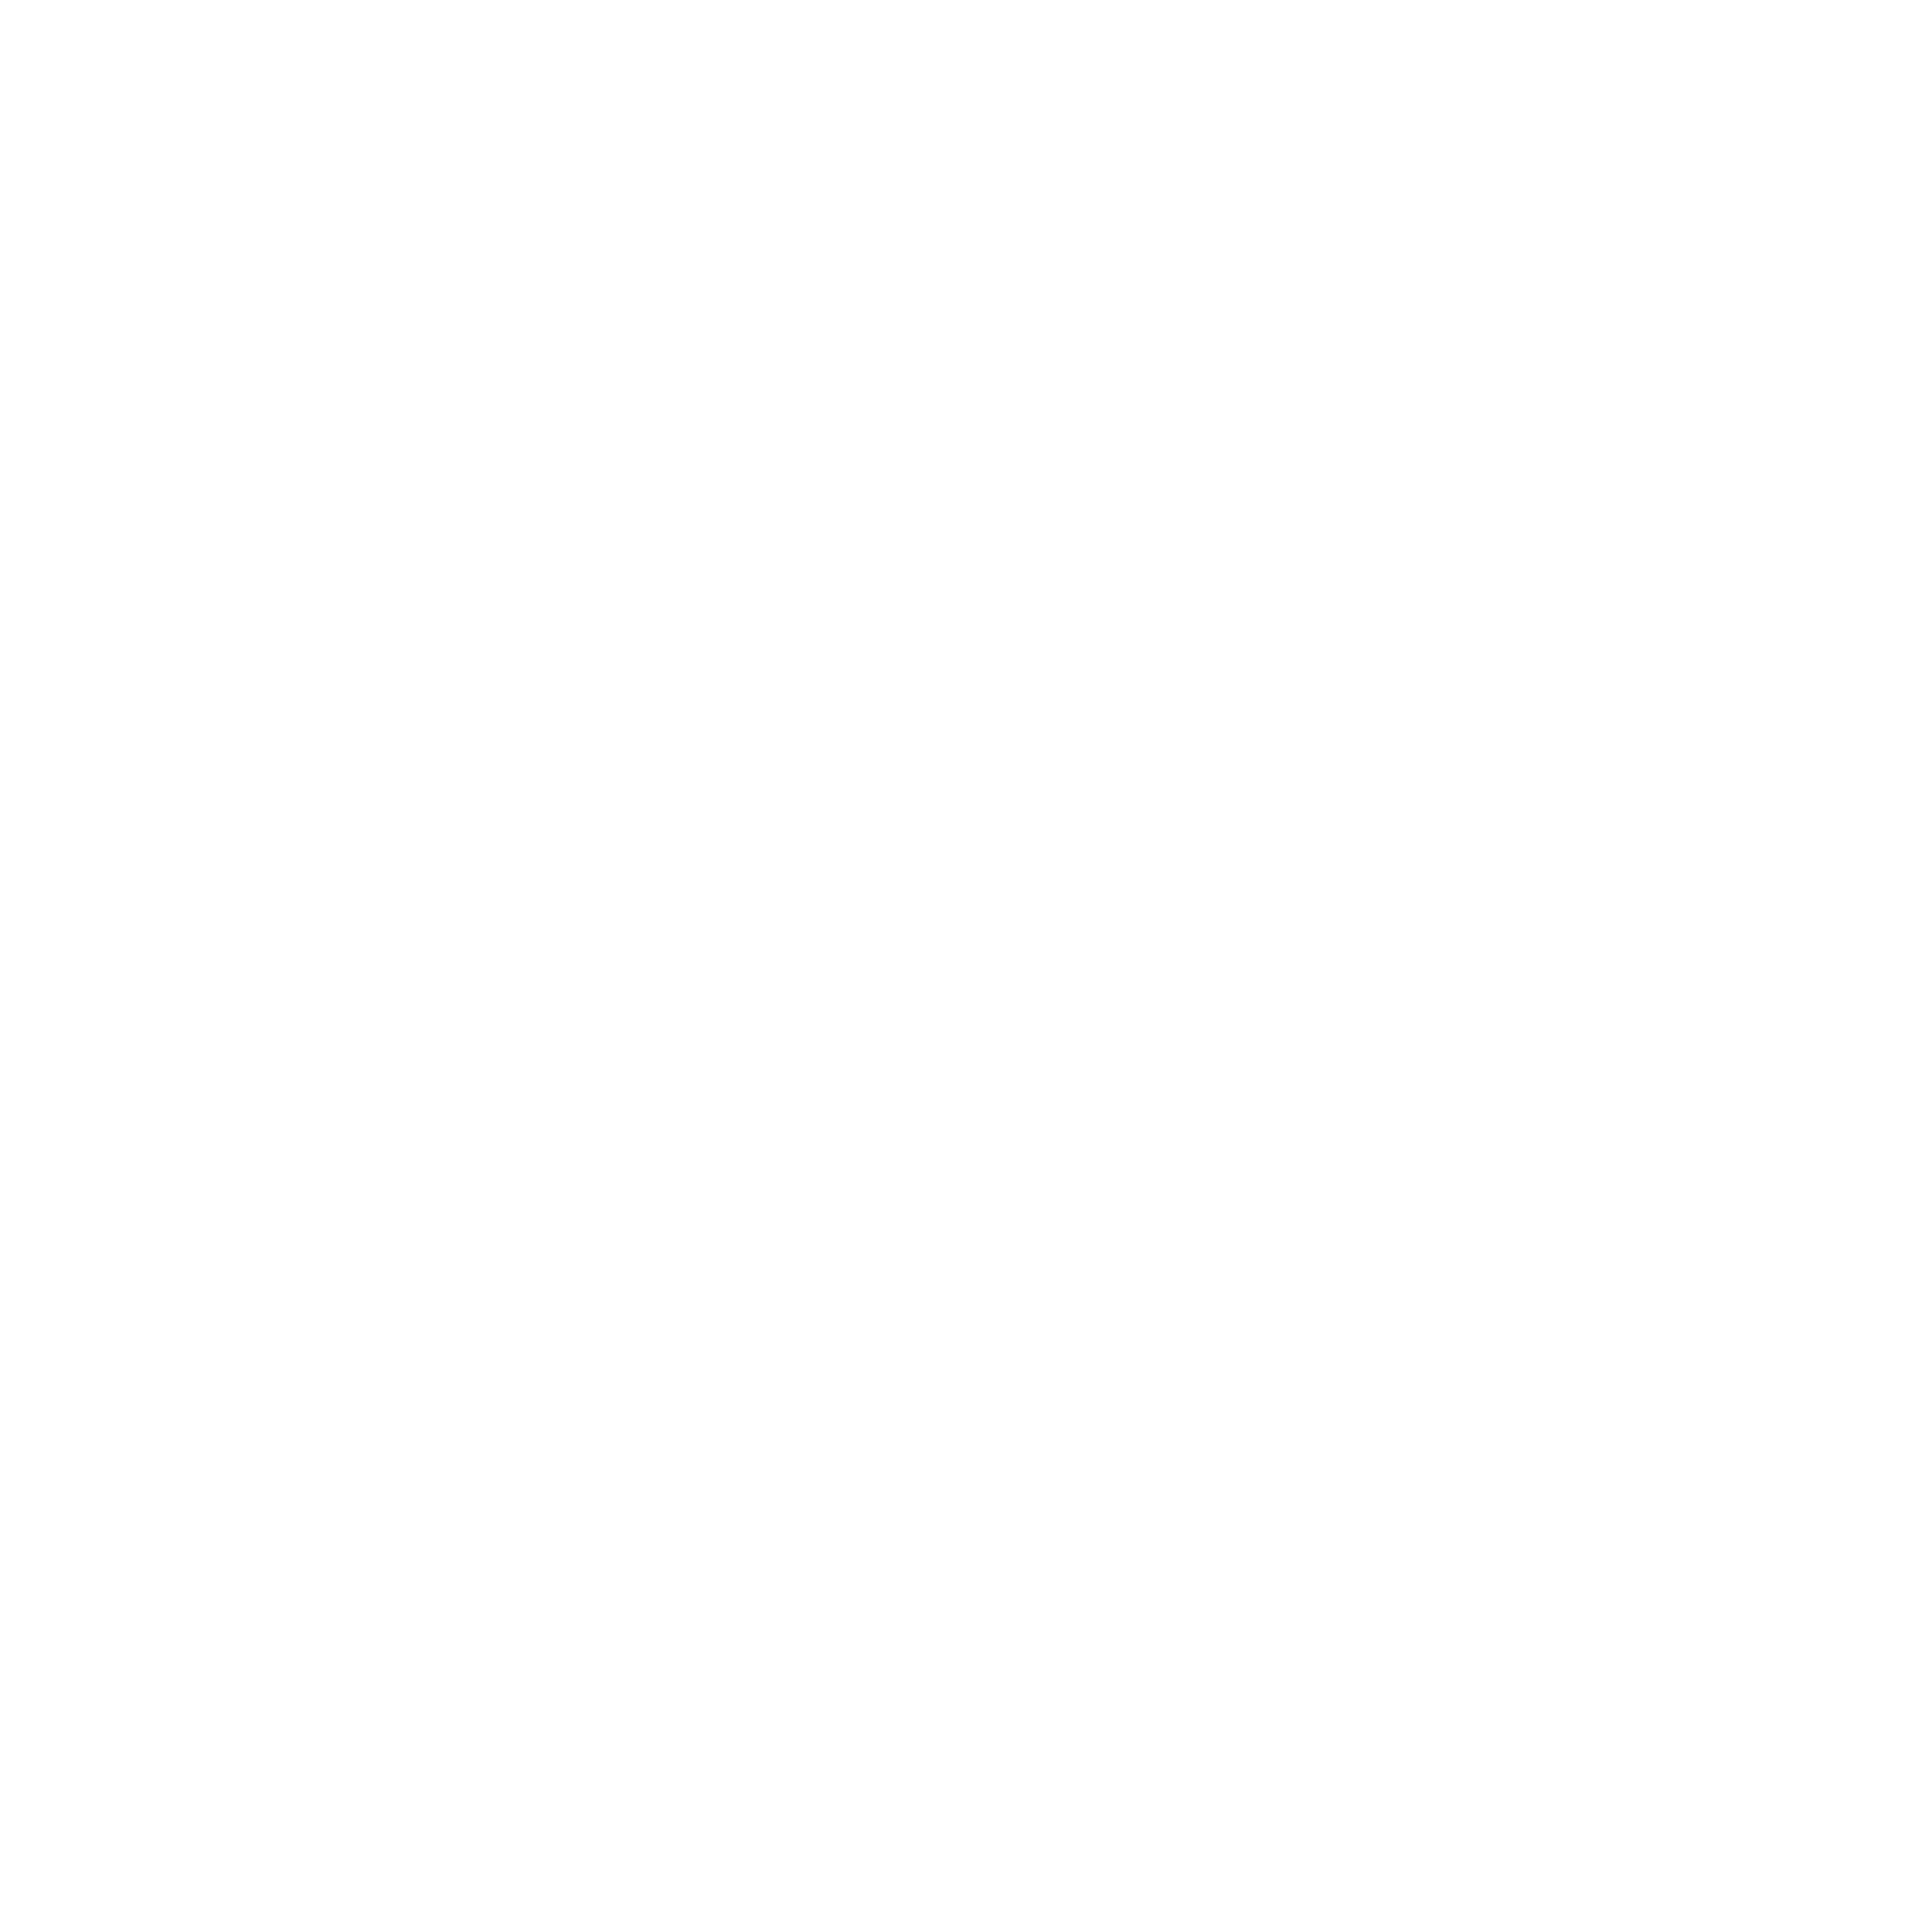 ASTD Logo PNG Transparent & SVG Vector - Freebie Supply